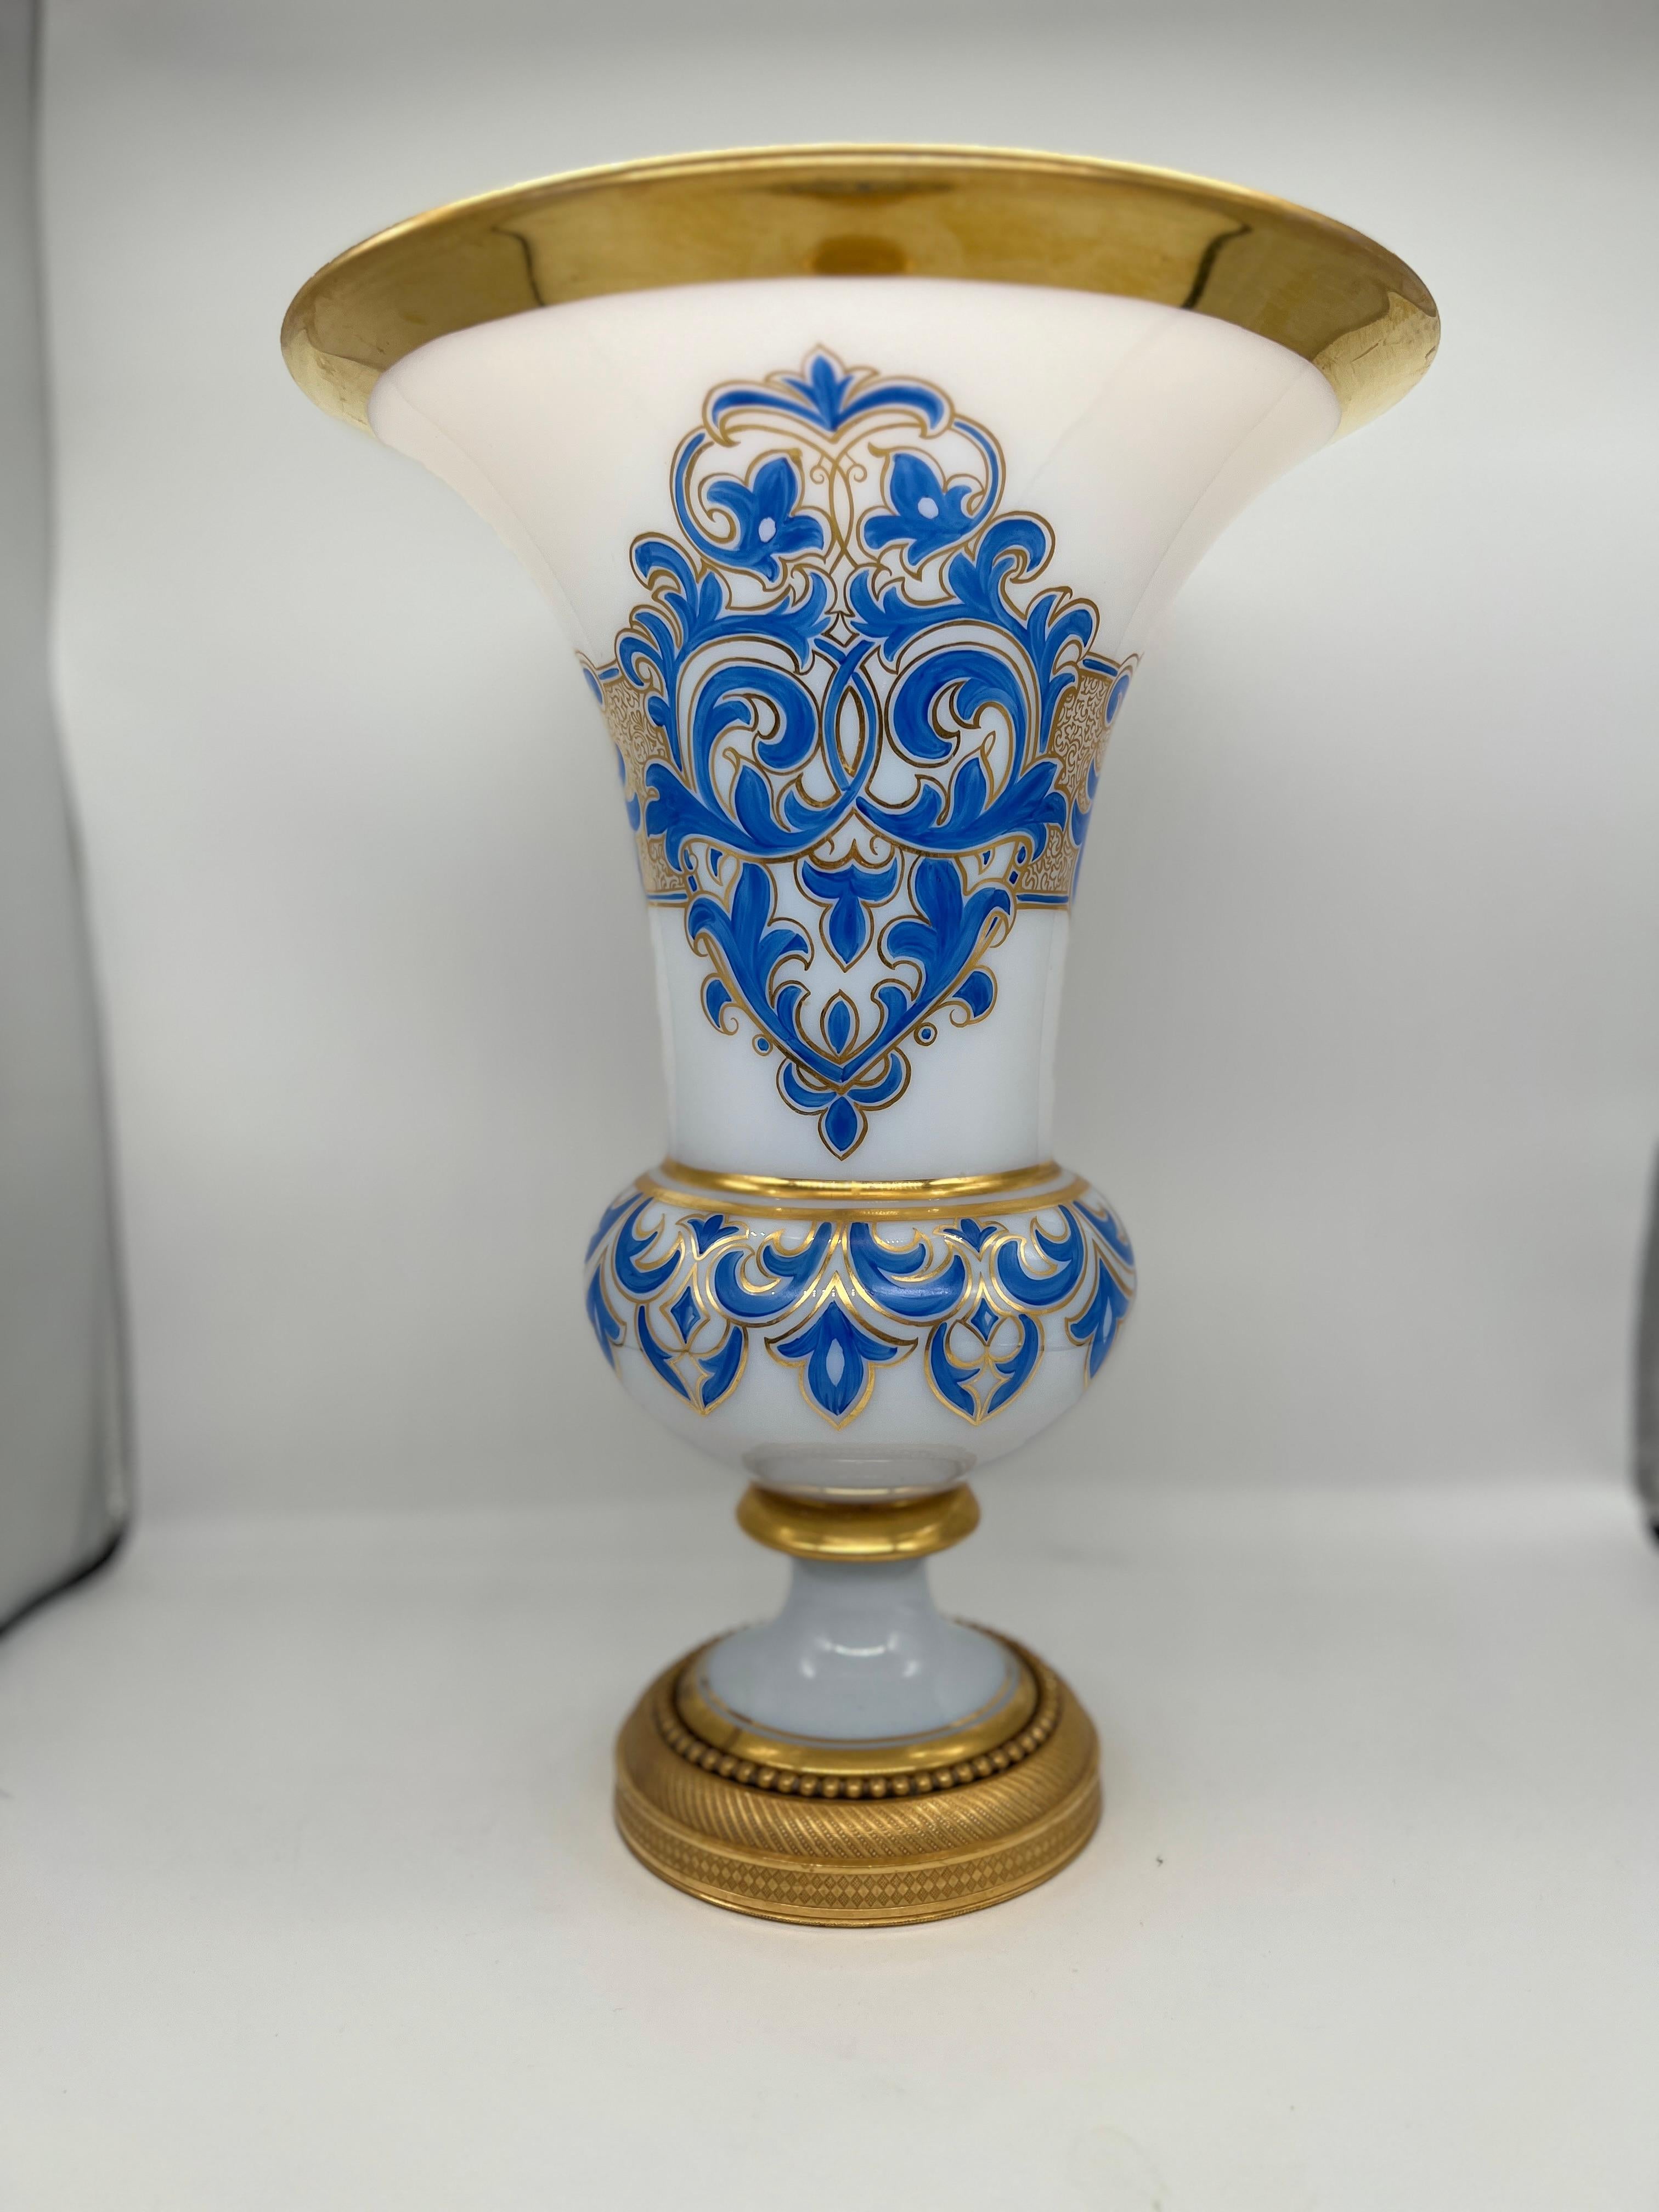 Lg. Baccarat French White Opaline, Gilt, Blue Enamel Bronze Ormolu Vase C. 1885 In Good Condition For Sale In Atlanta, GA